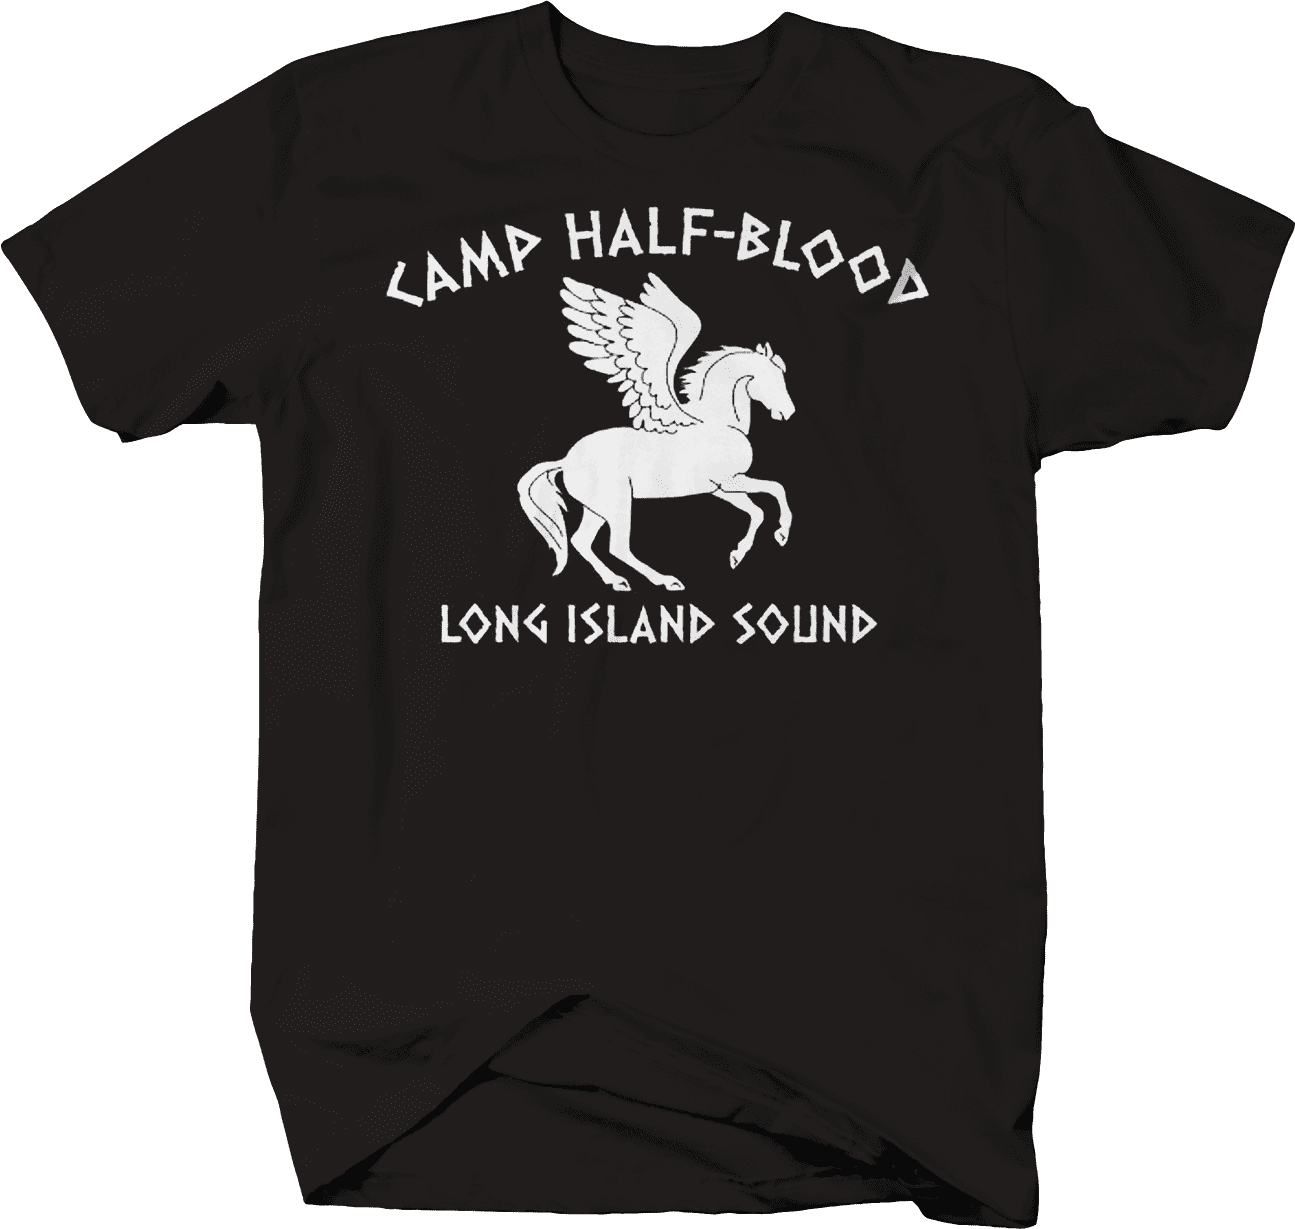 Camp Half-blood Tee 